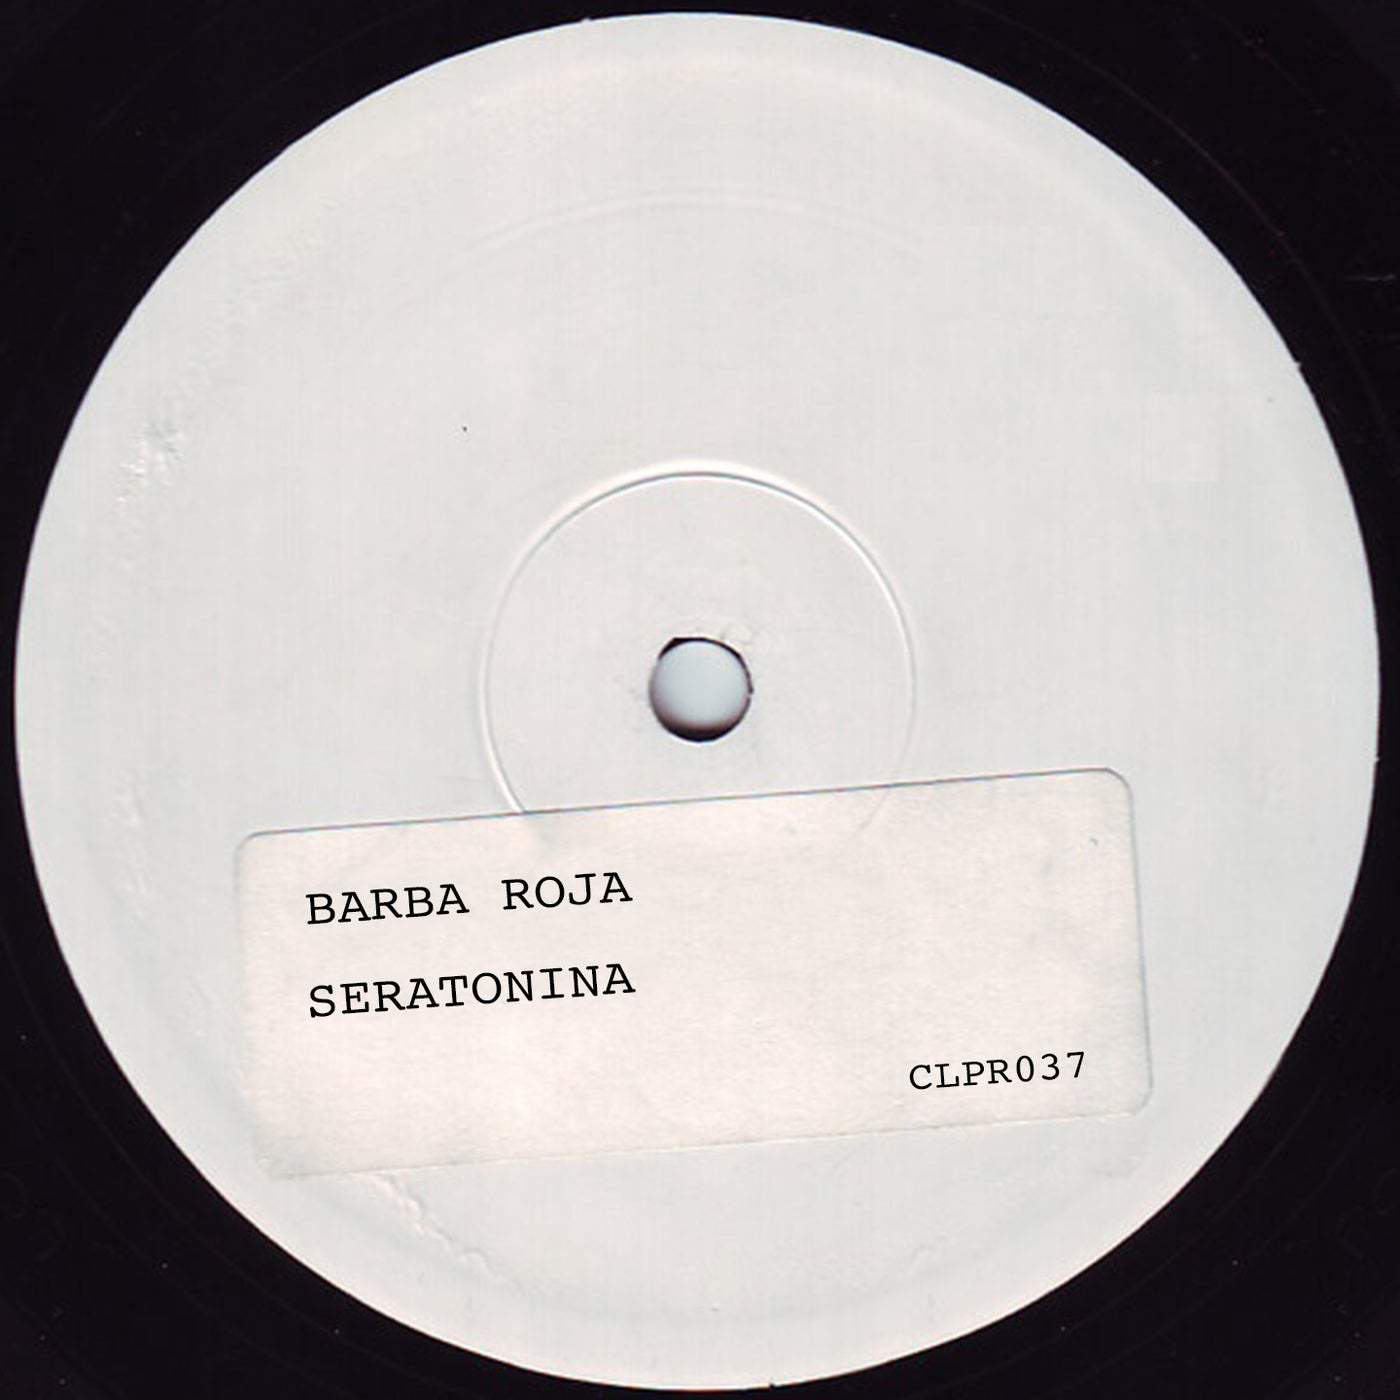 Download Barba Roja - Seratonina on Electrobuzz